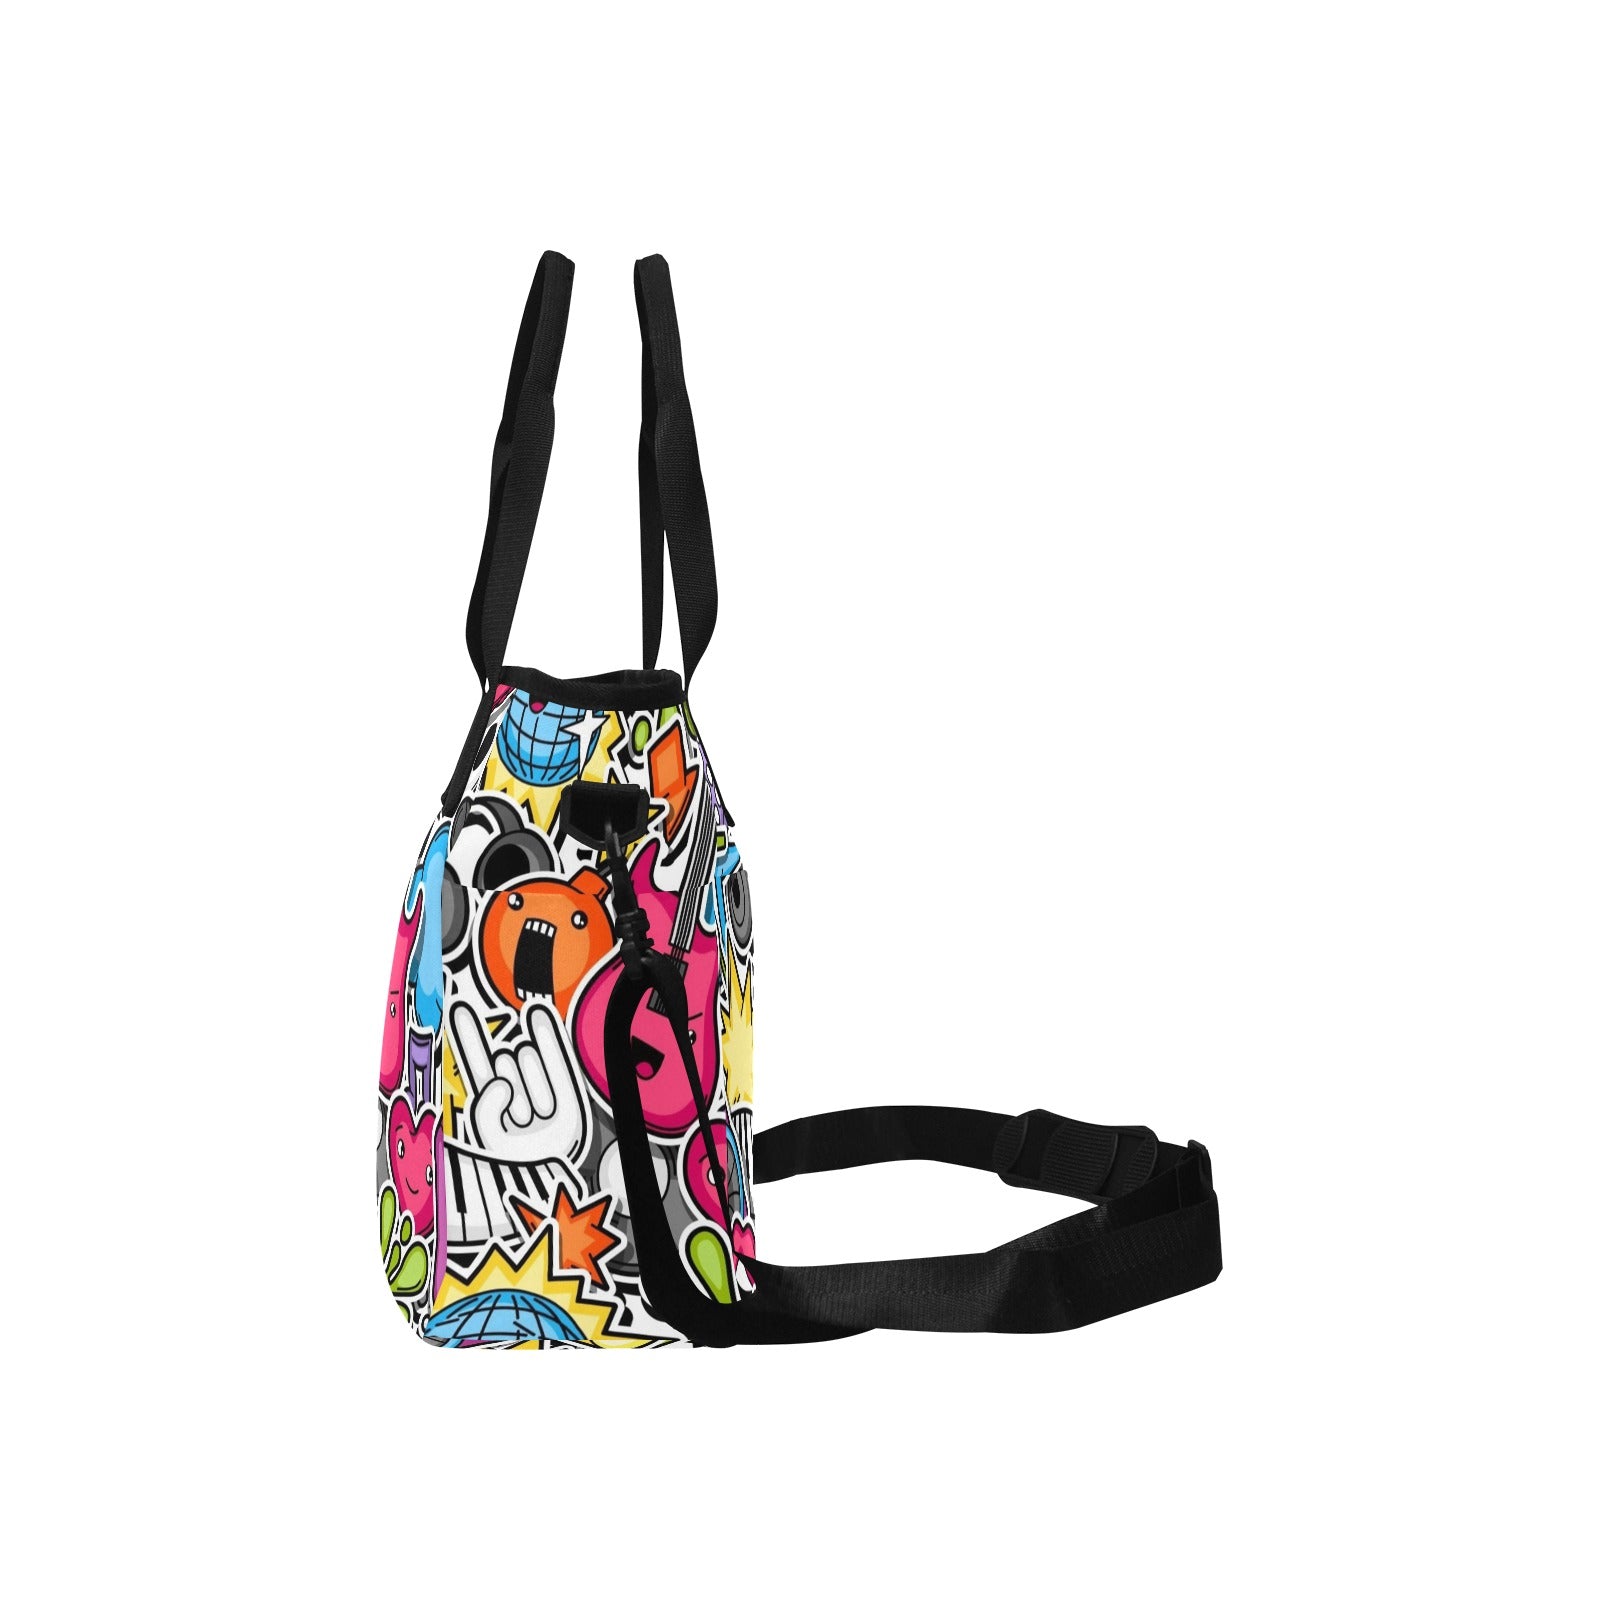 Sticker Music - Tote Bag with Shoulder Strap Nylon Tote Bag